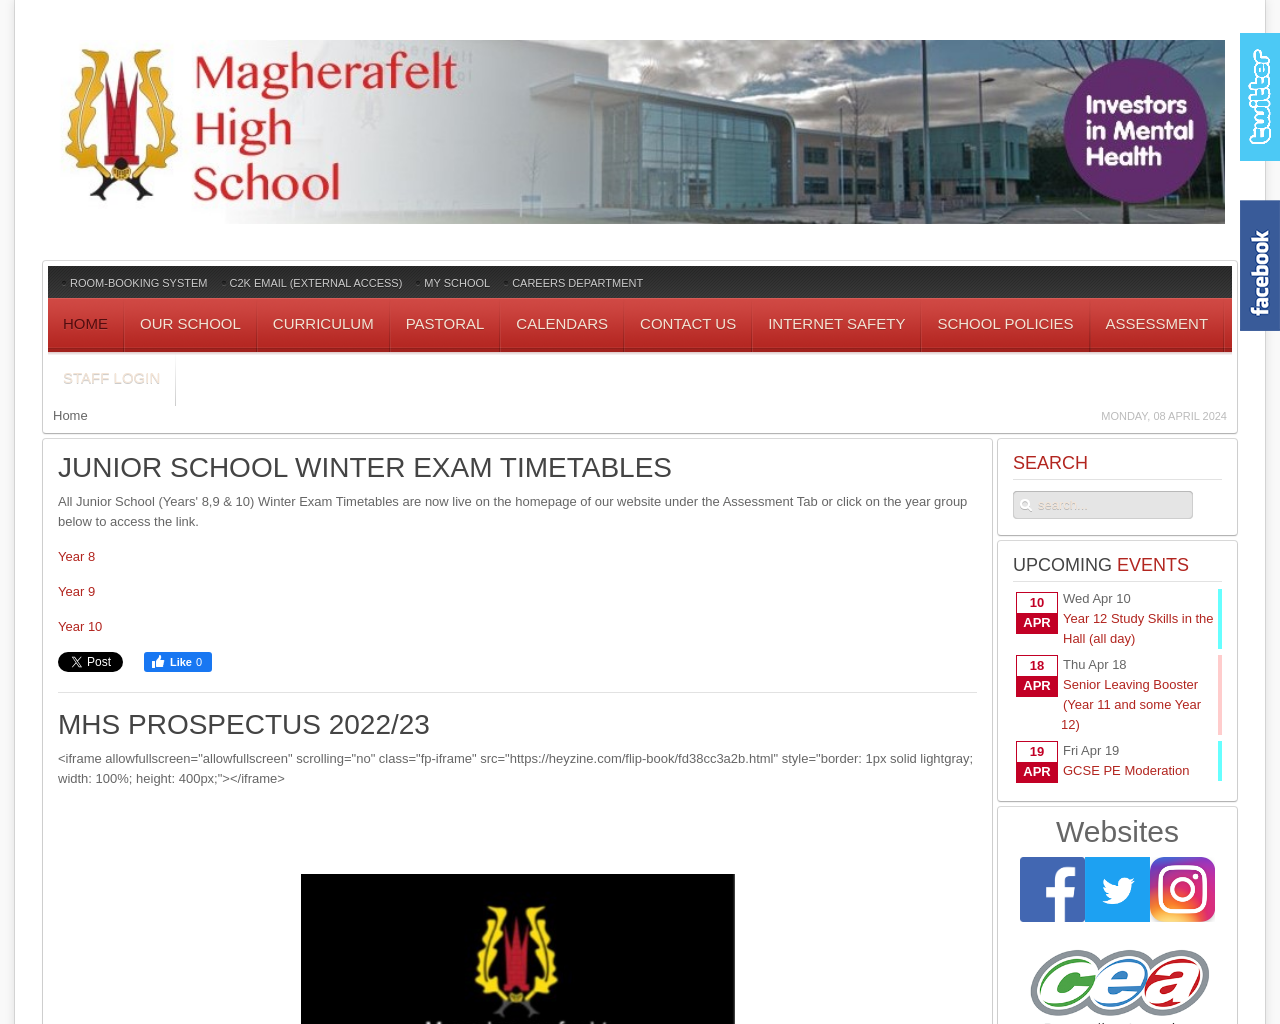 Magherafelt High School